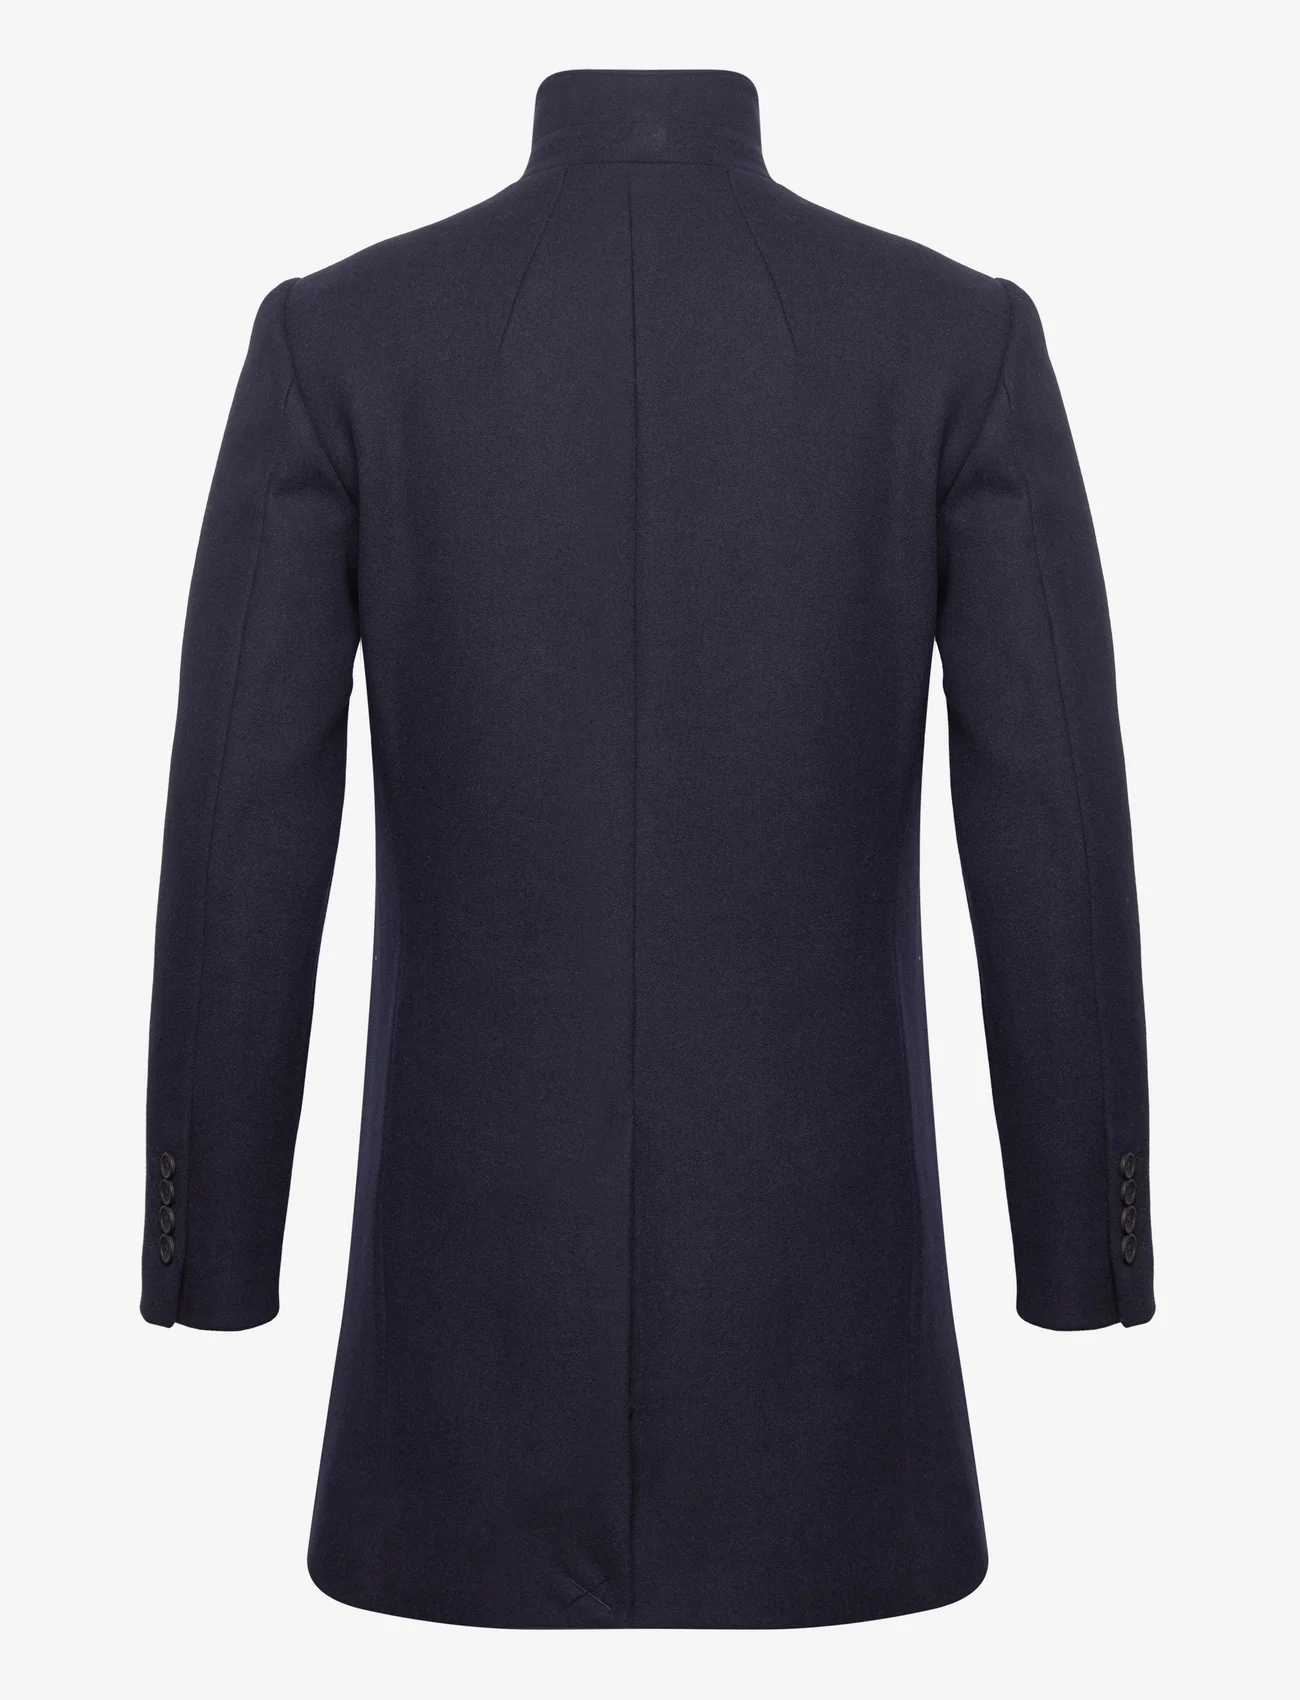 Bruun & Stengade - BS Ontario Slim Fit Coat - winter jackets - navy - 1